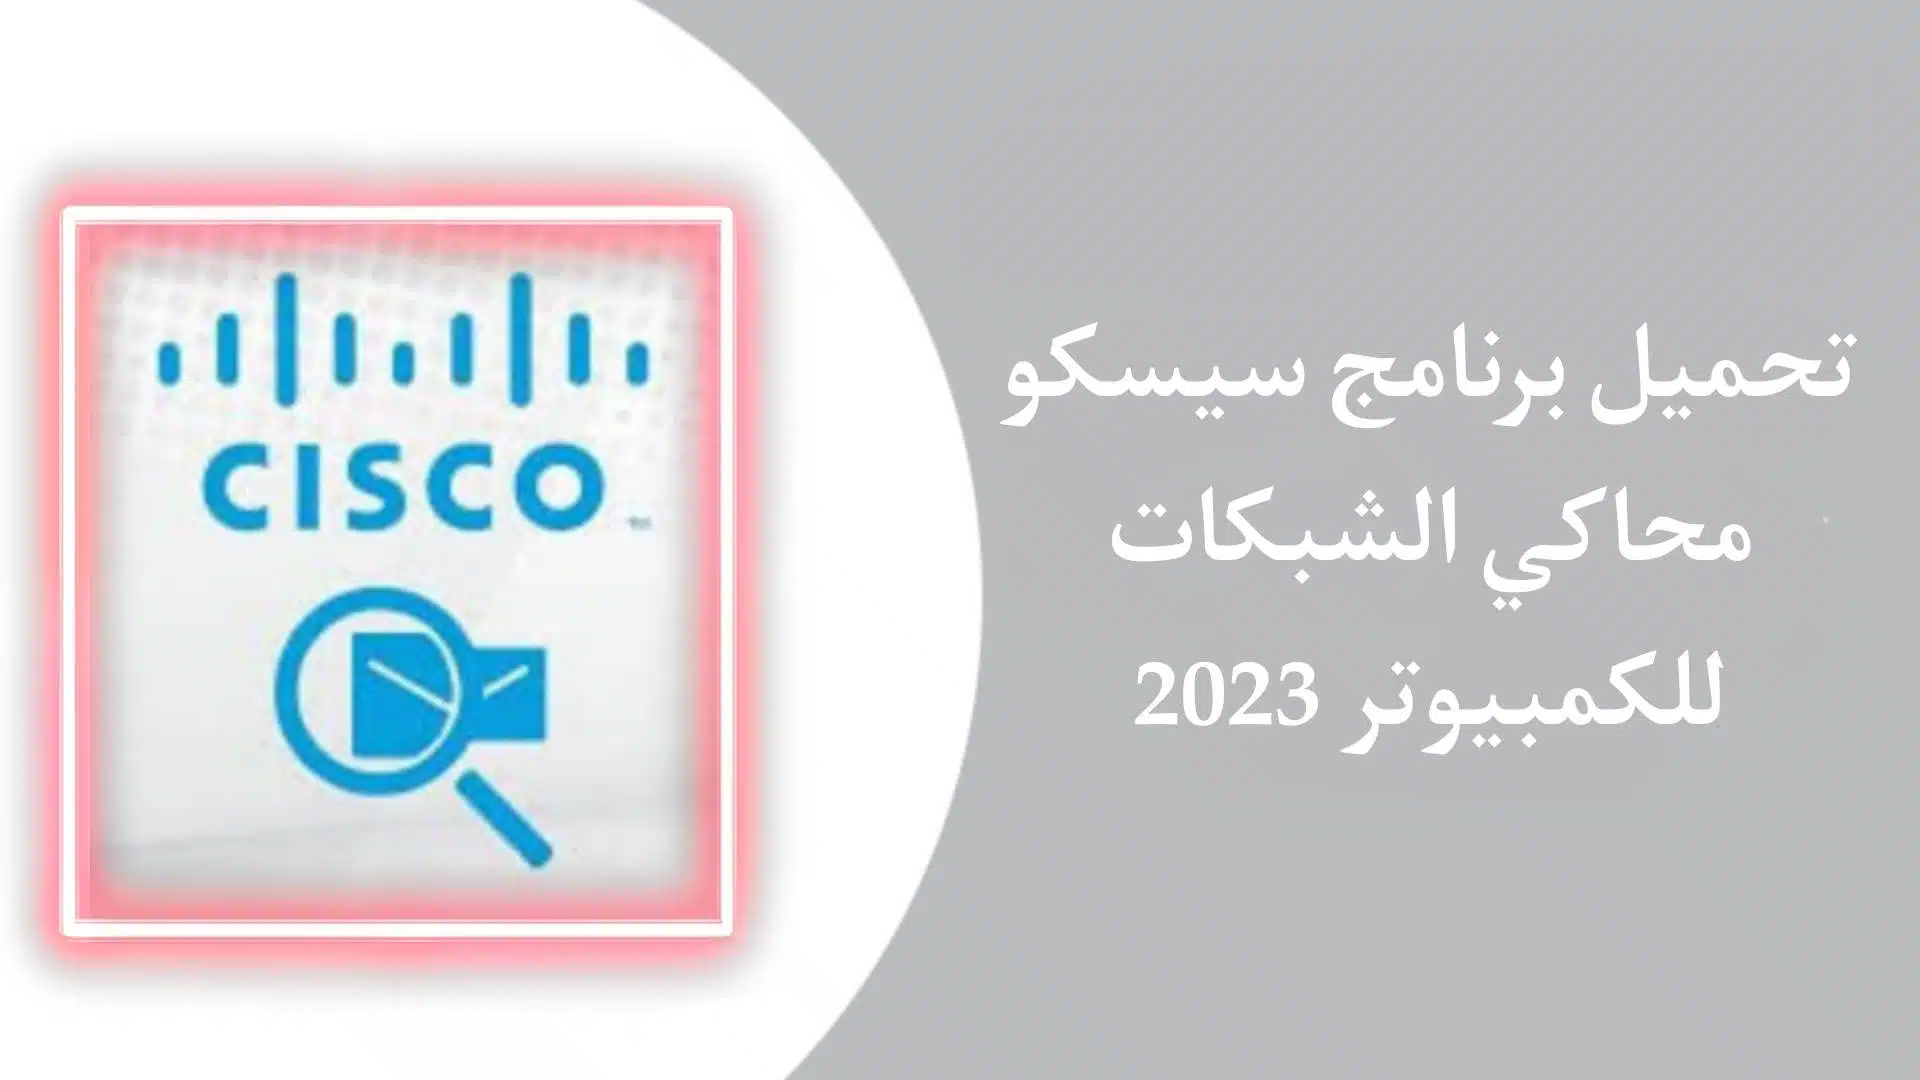 تحميل برنامج سيسكو محاكي الشبكات Cisco Packet Tracer للكمبيوتر برابط مباشر